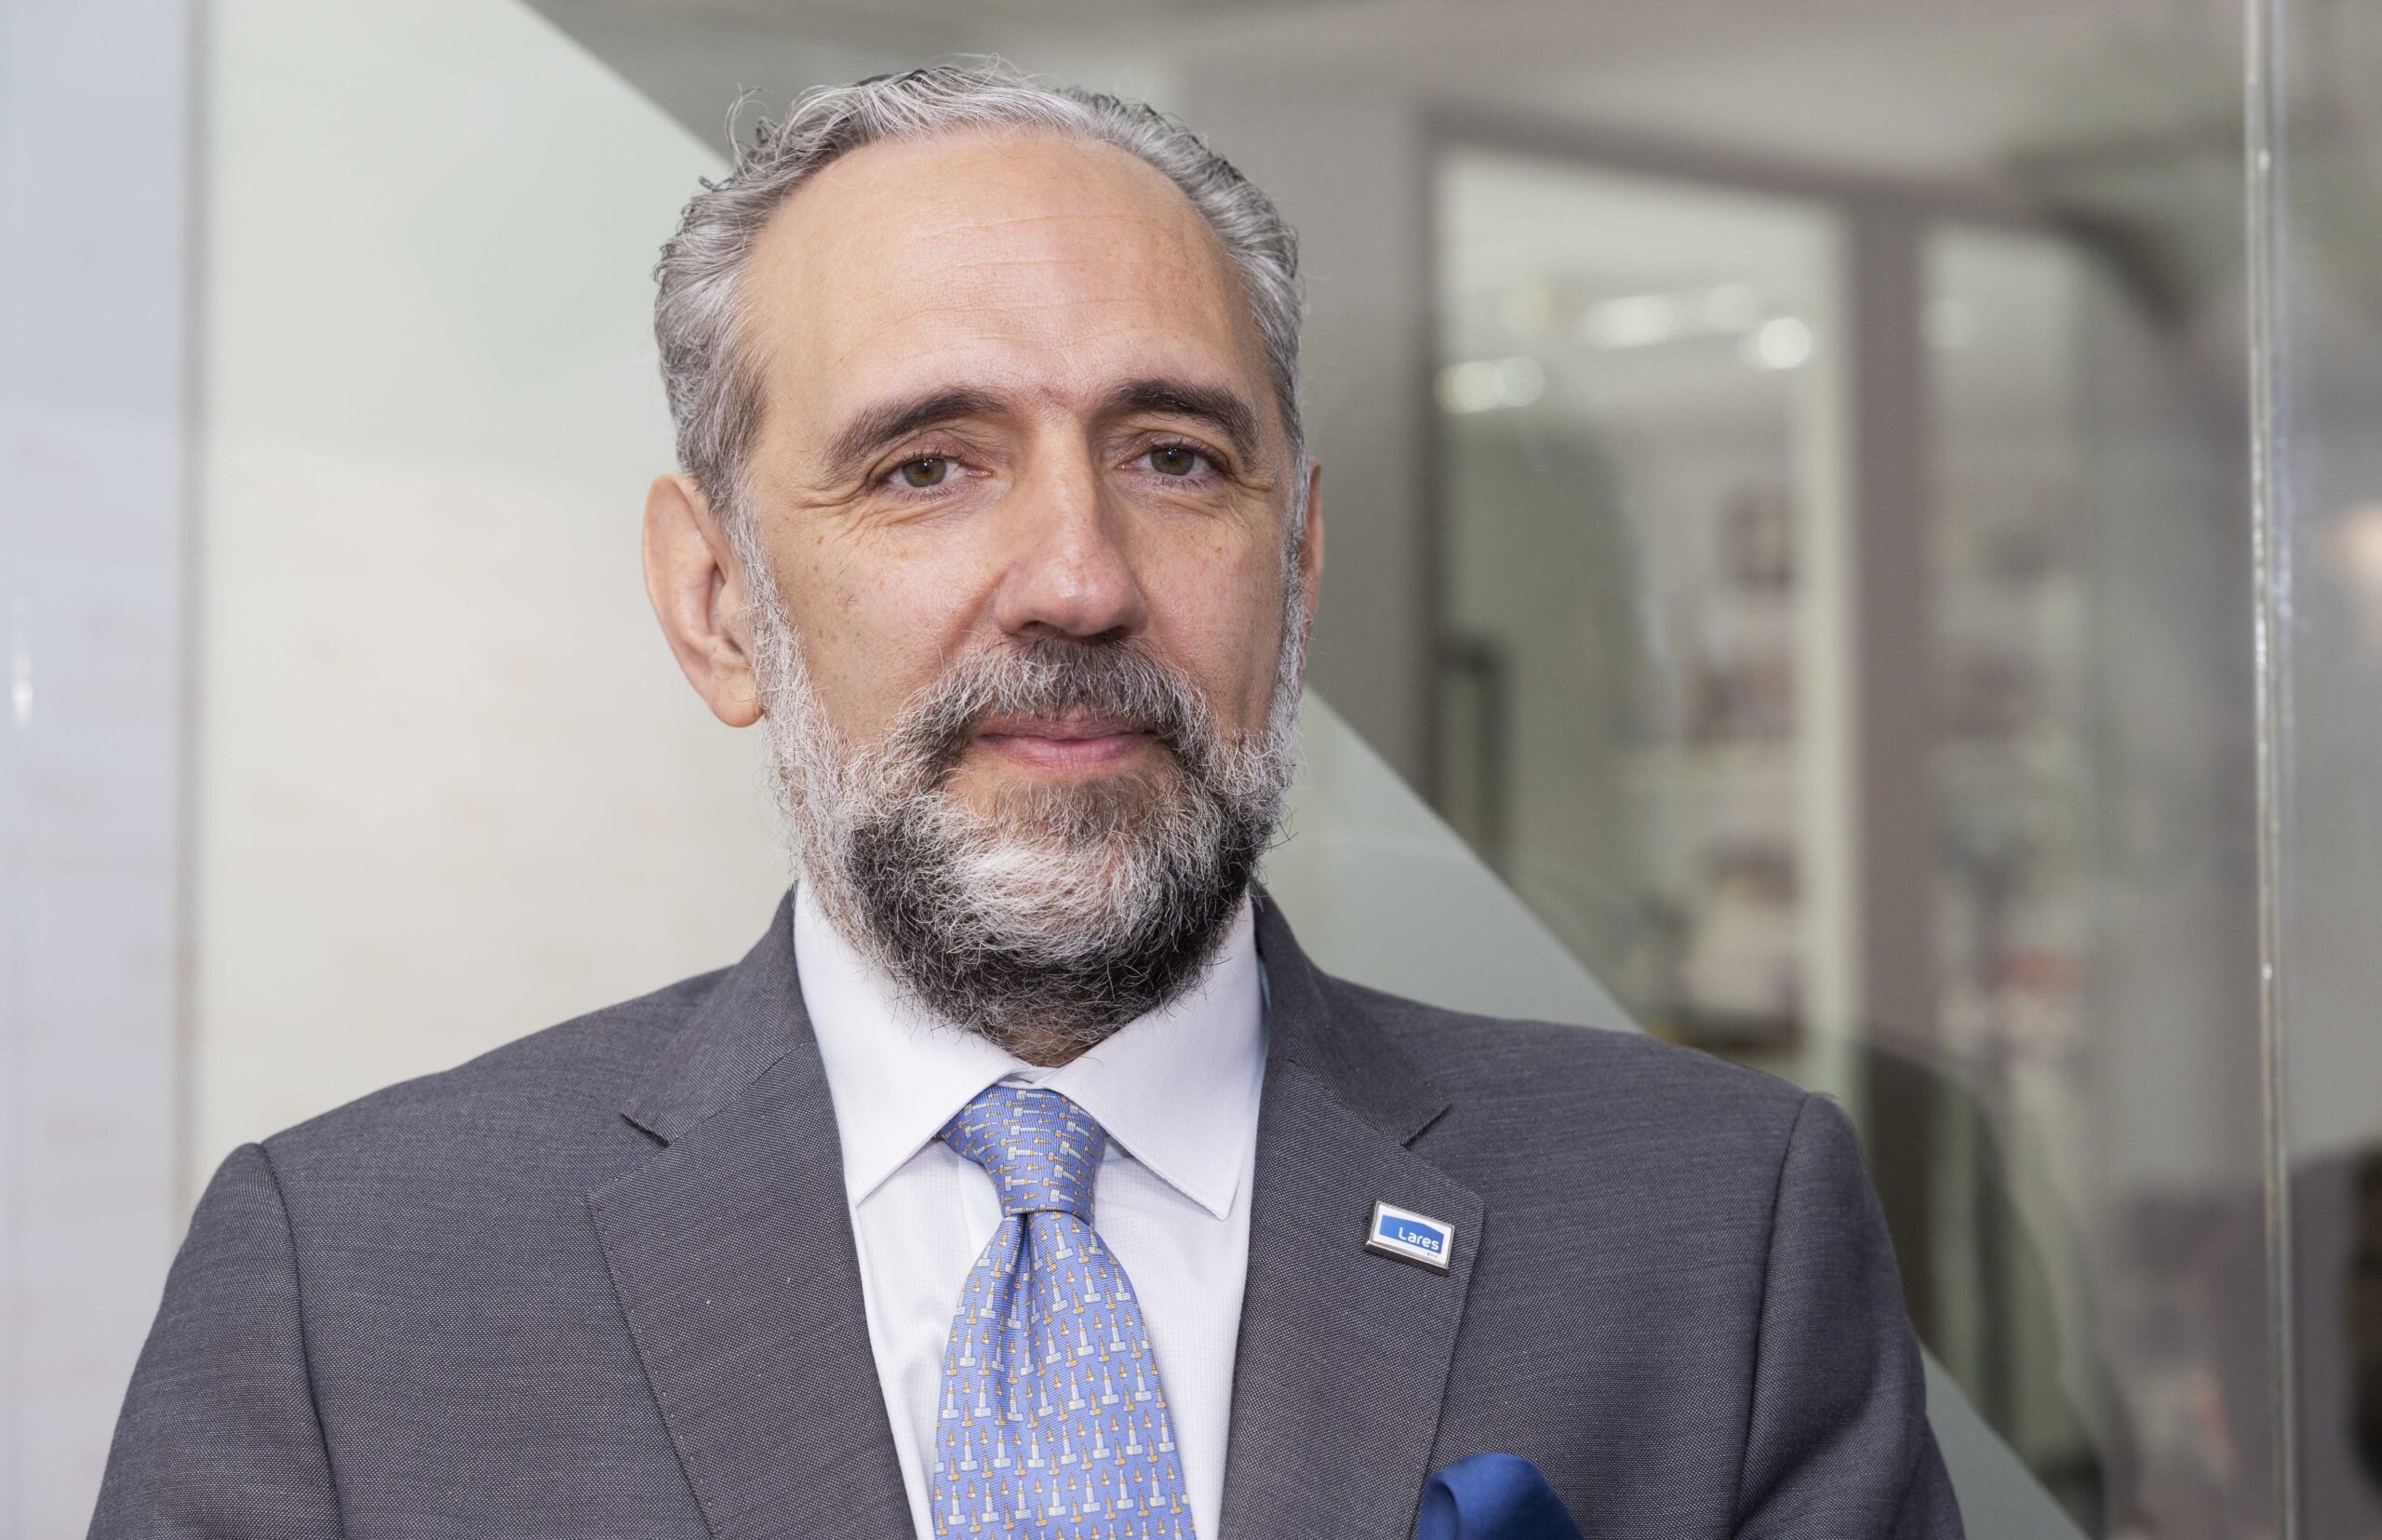 Jose Luis Pareja Joins the Board of Directors